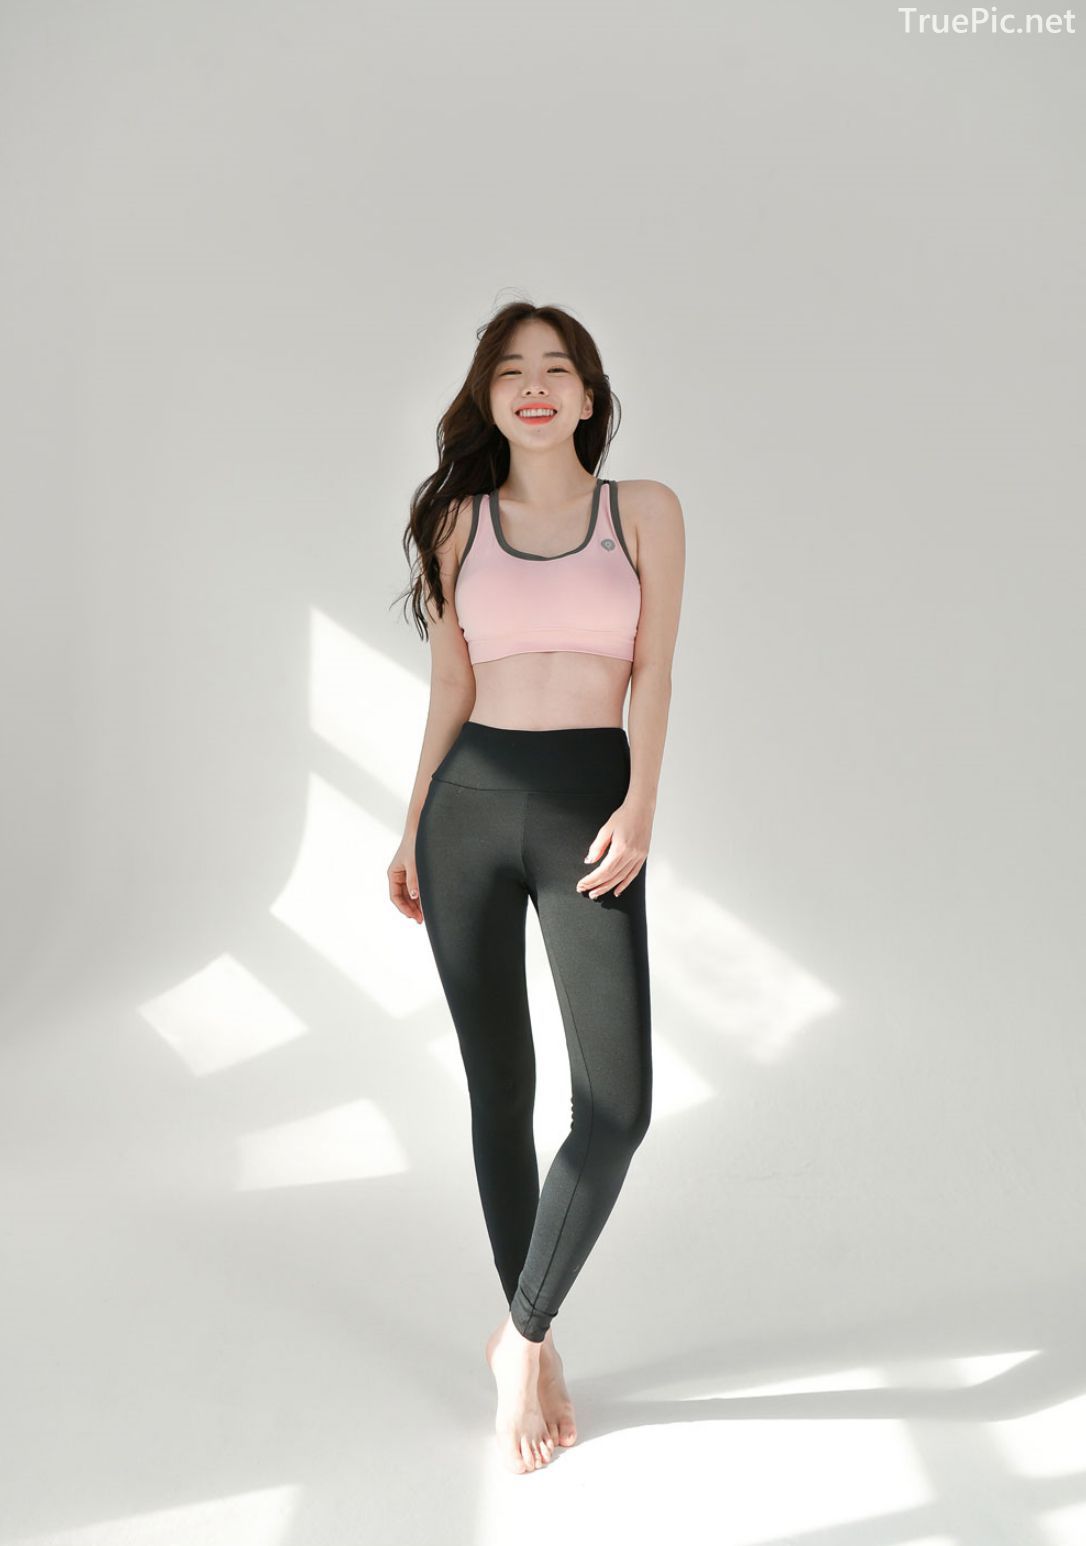 Korean Lingerie Queen - Haneul - Fitness Set Collection - TruePic.net - Picture 44